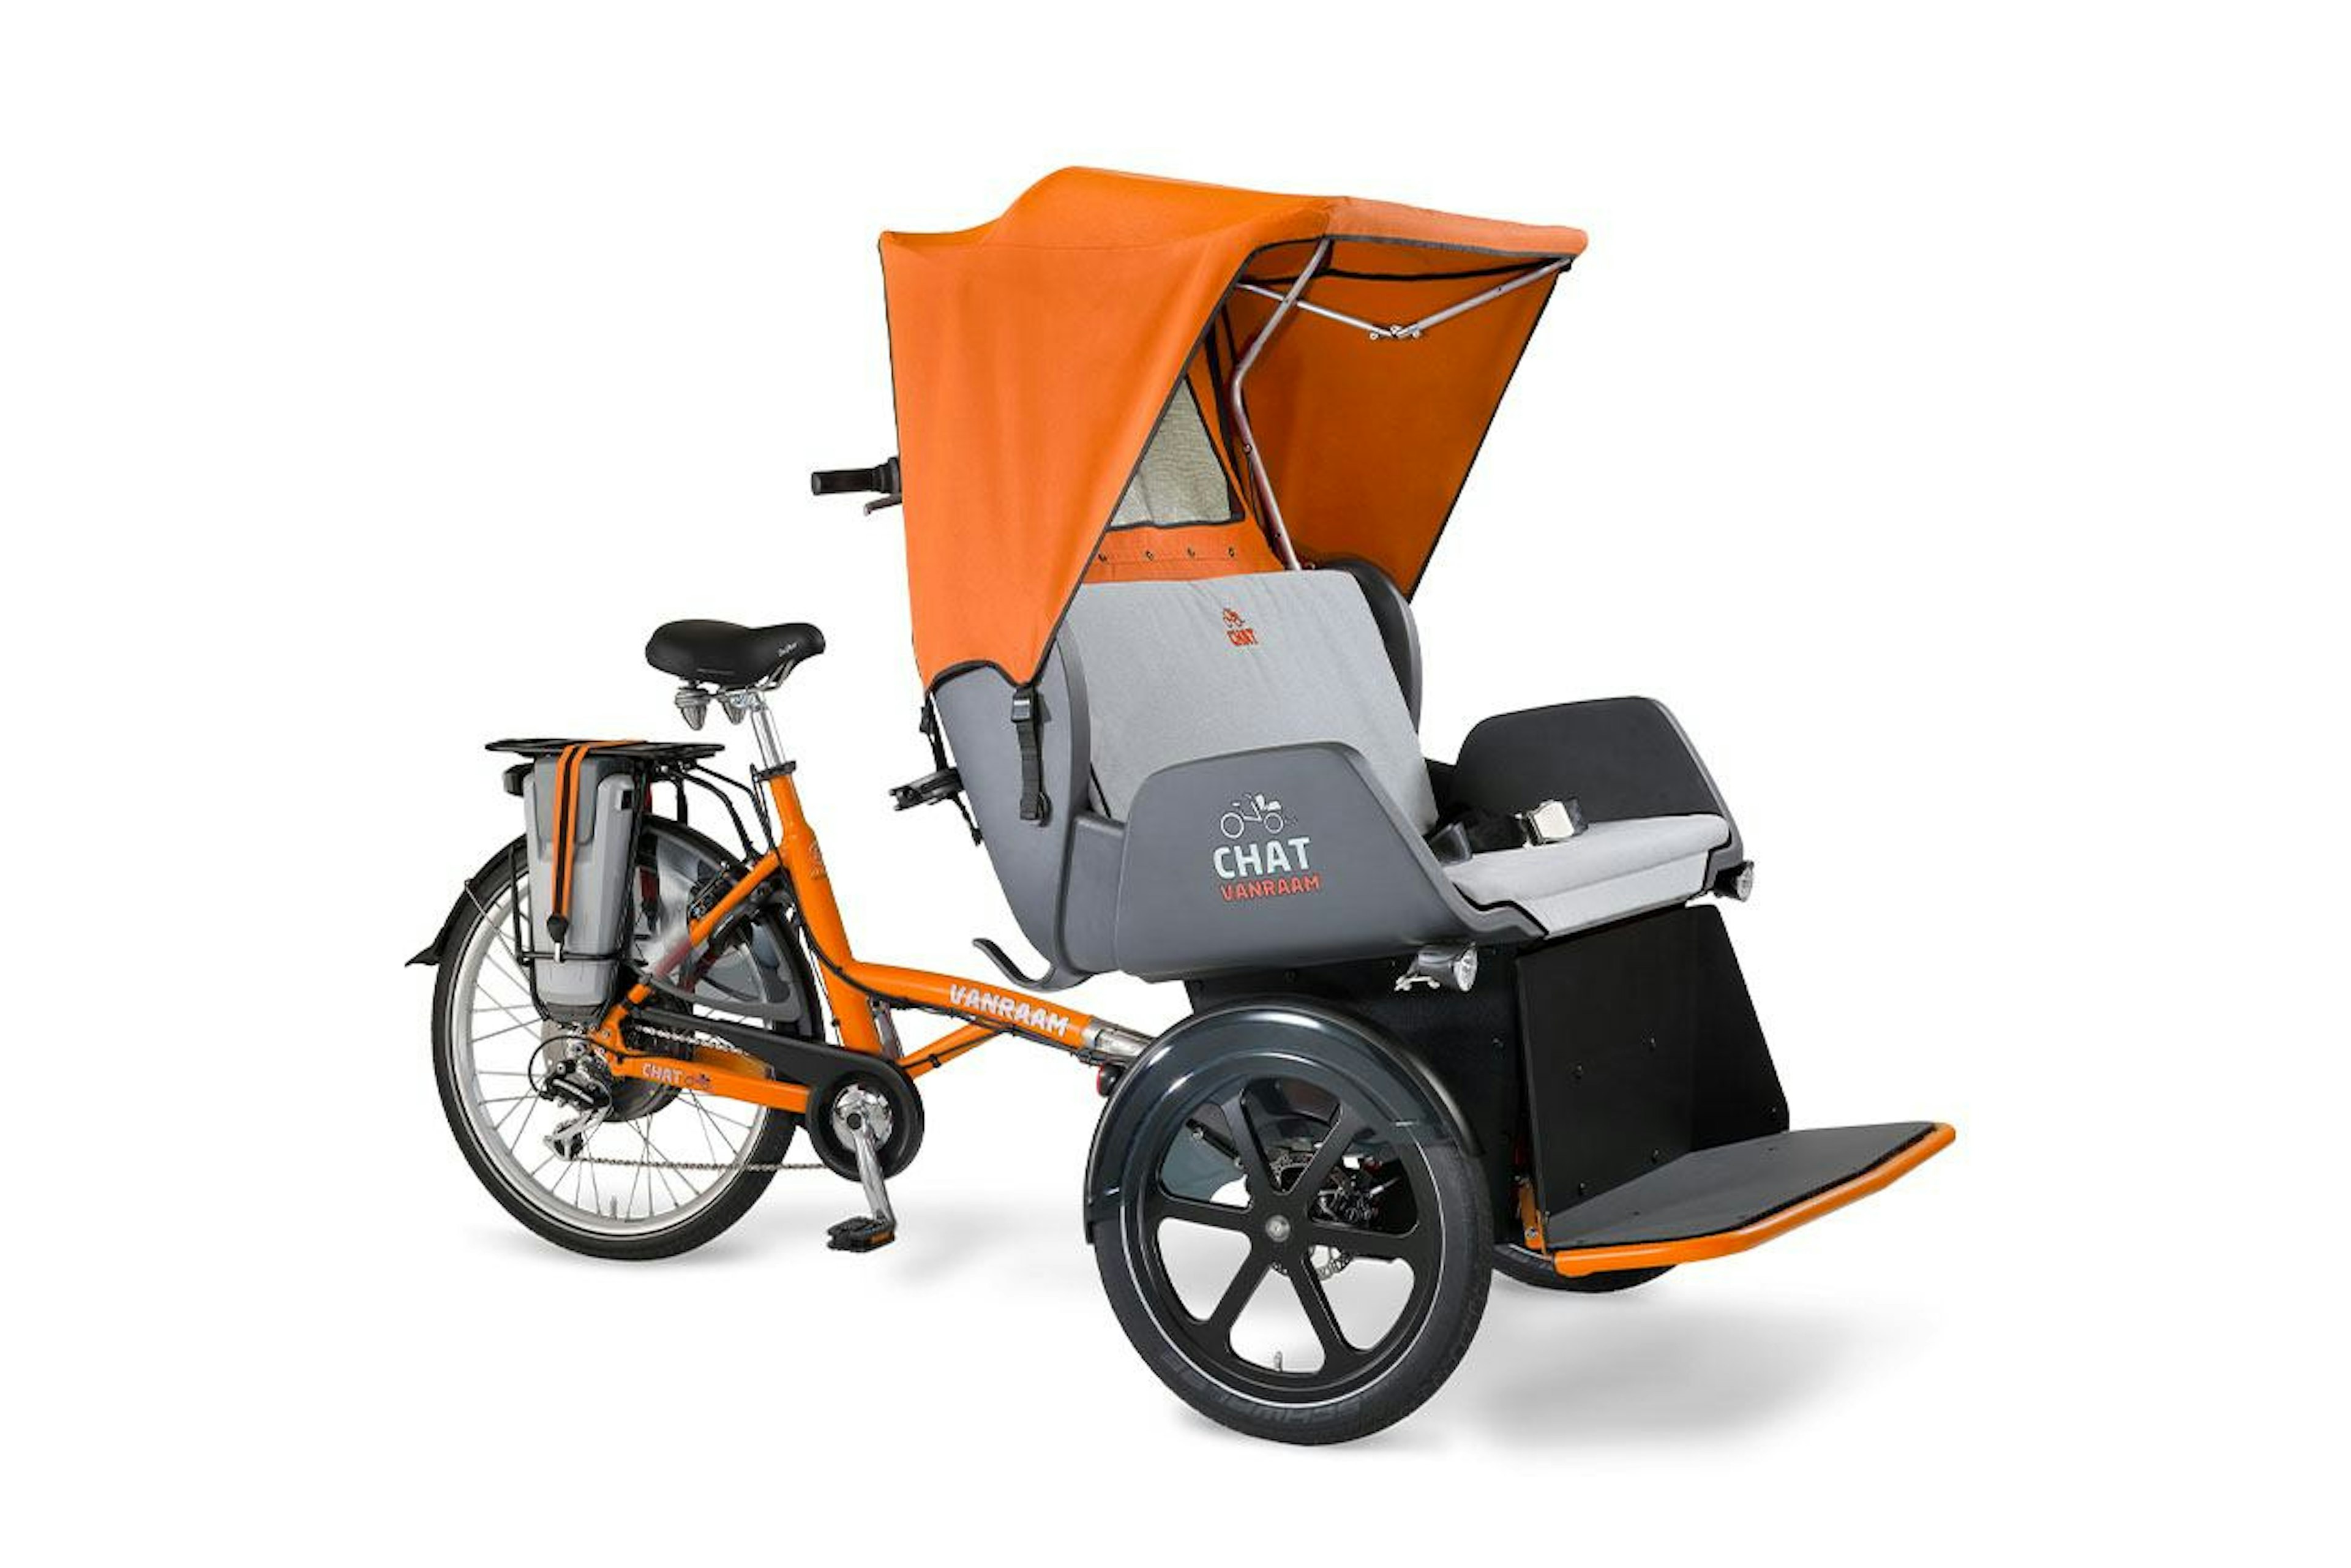 Chat Rickshaw Transport Bike Van Raam with orange cap